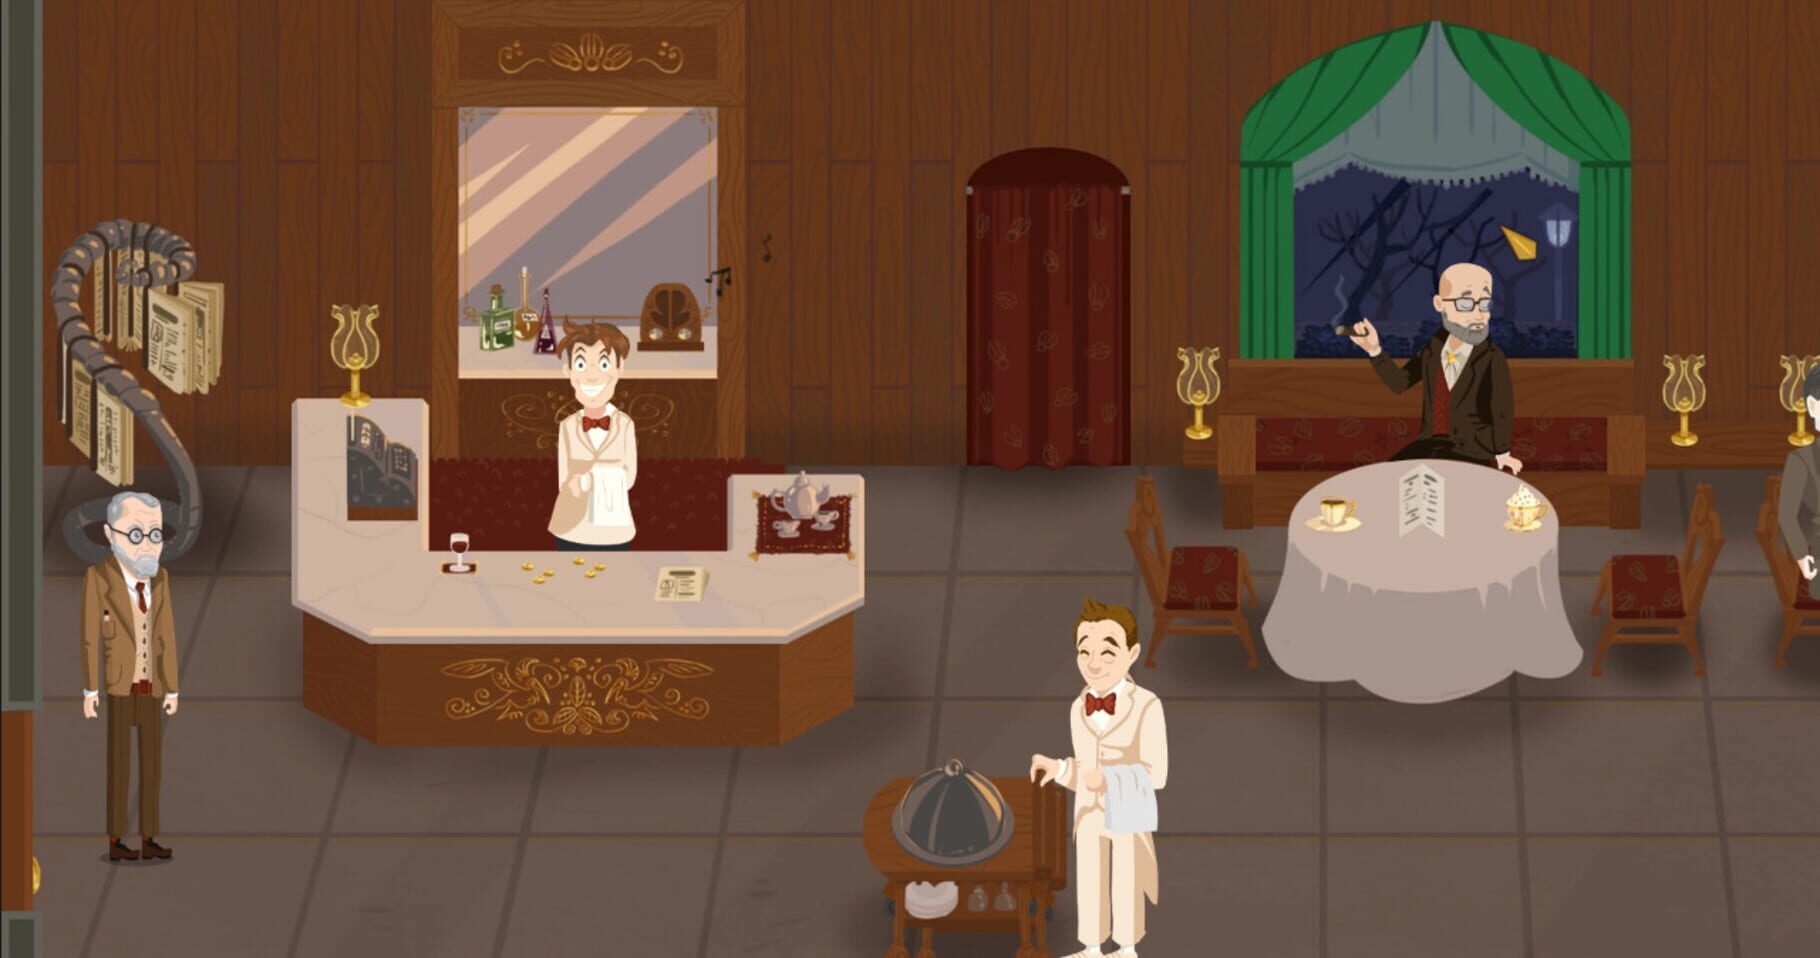 Freud's Bones: The Game screenshot